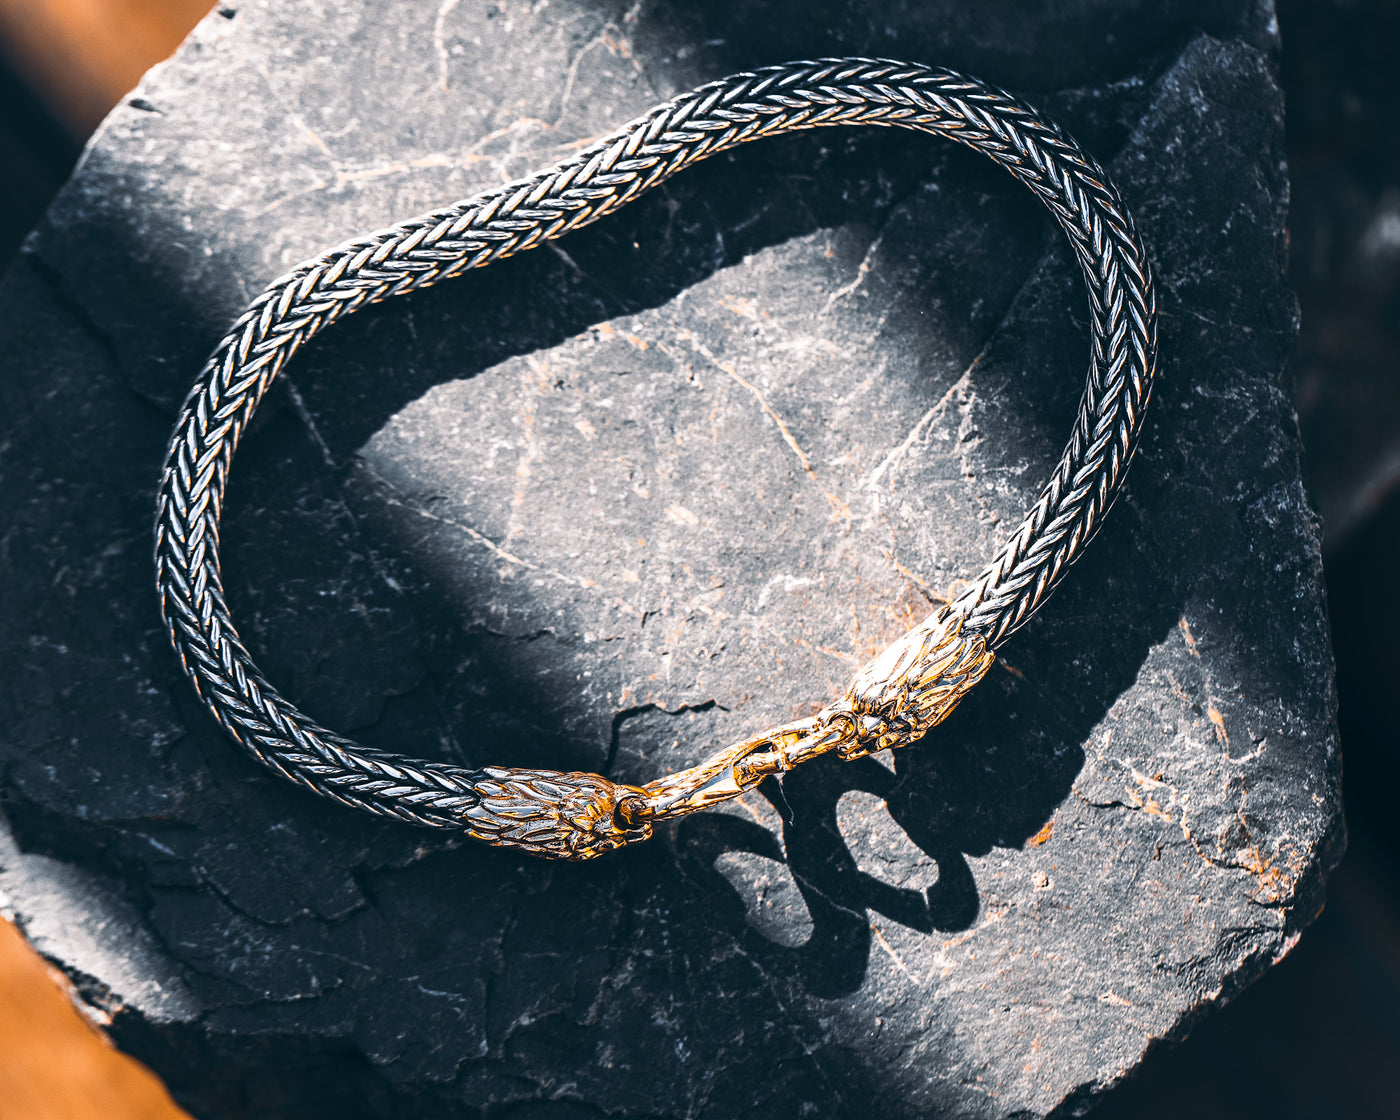 Lion Gold / Silver Bracelet